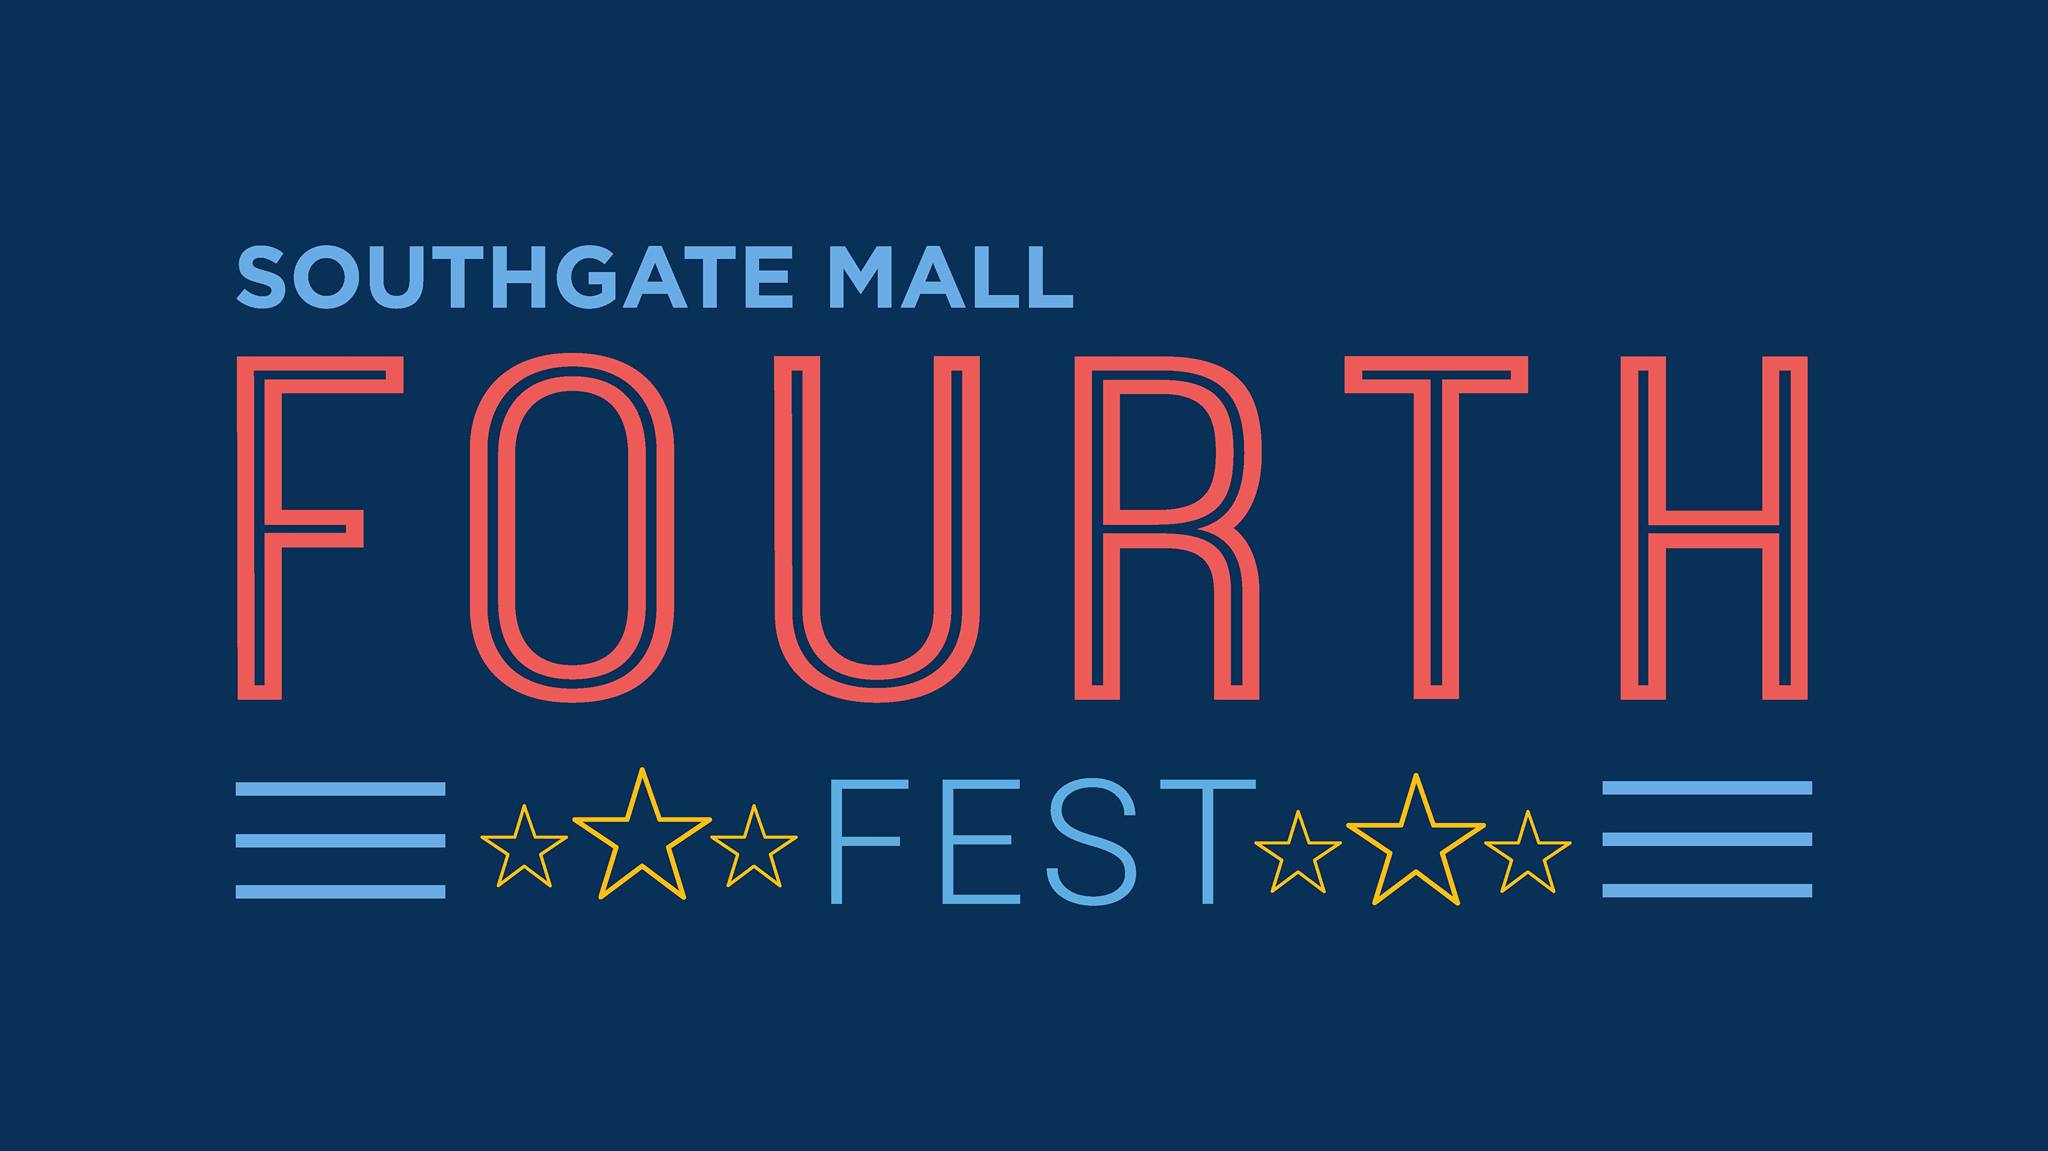 Southgate Mall Fourth Fest